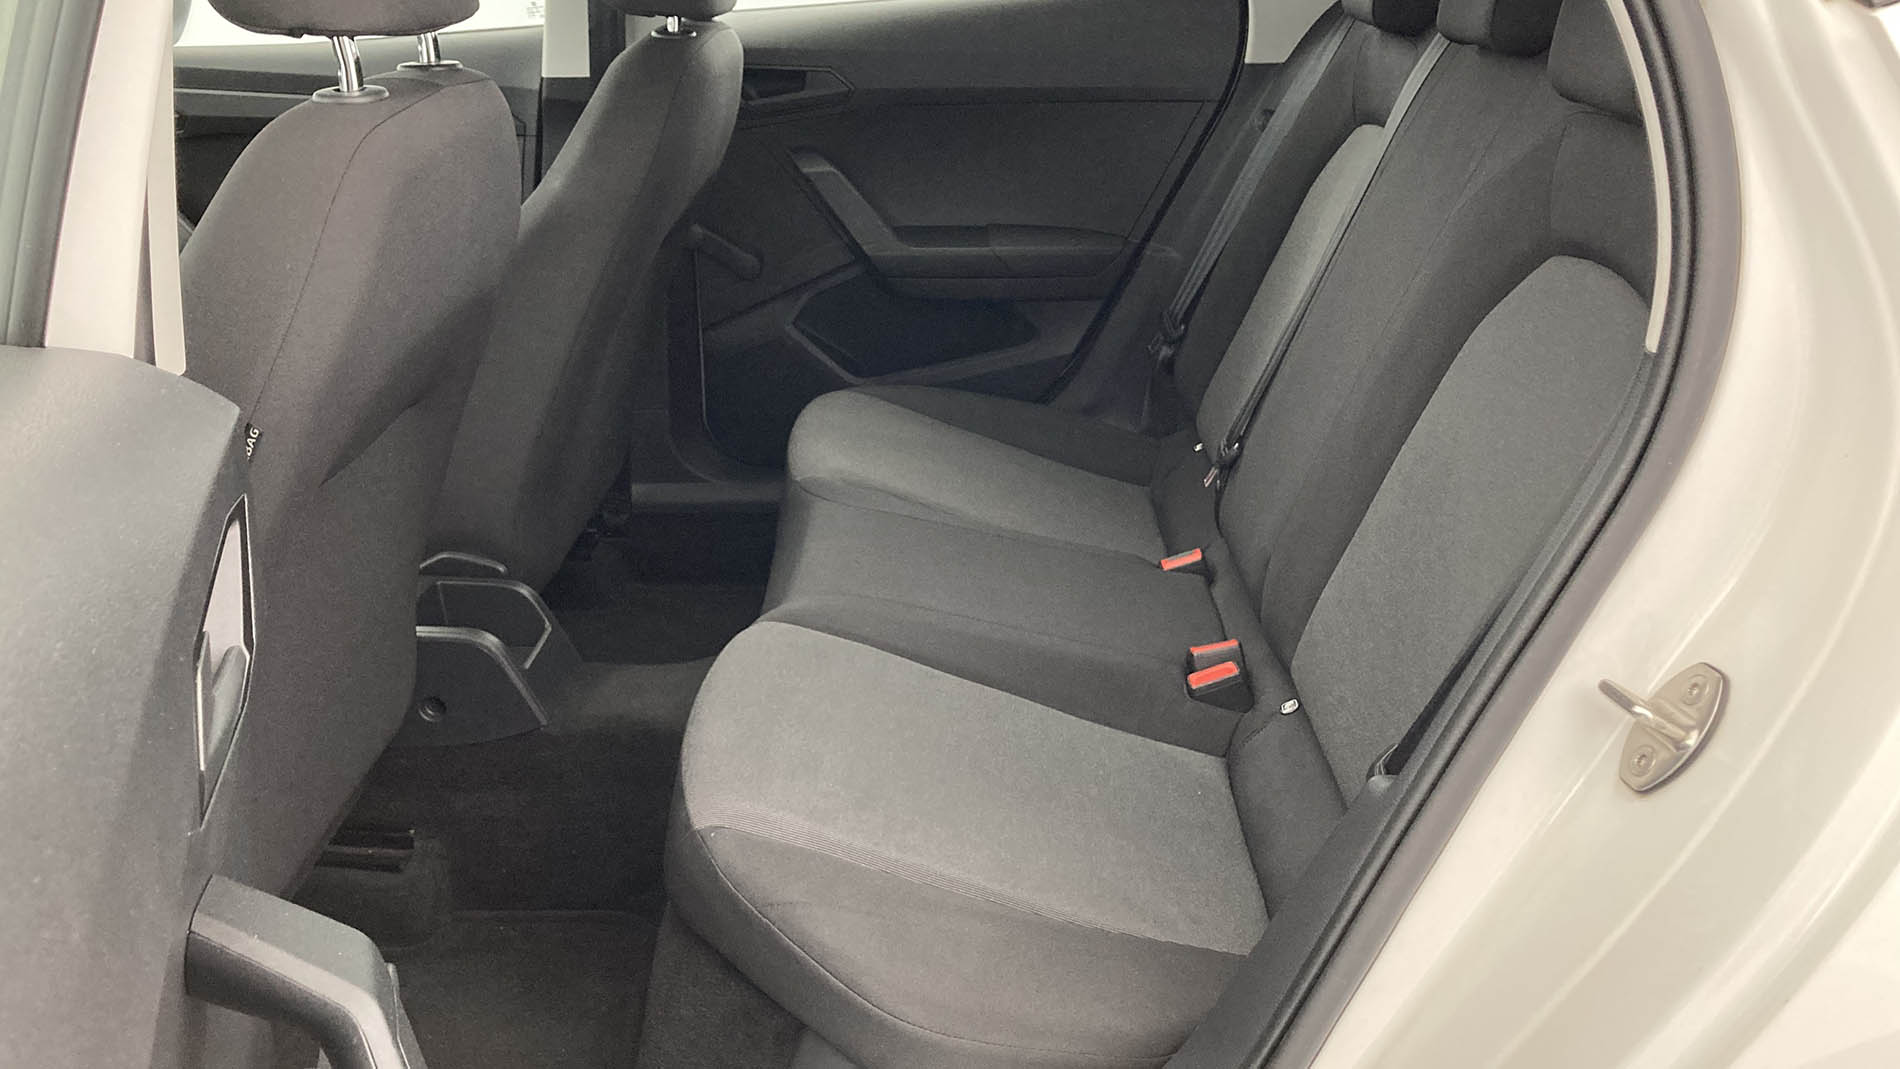 seat ibiza reference 1.0 MPI 80 2019 metallic white 19